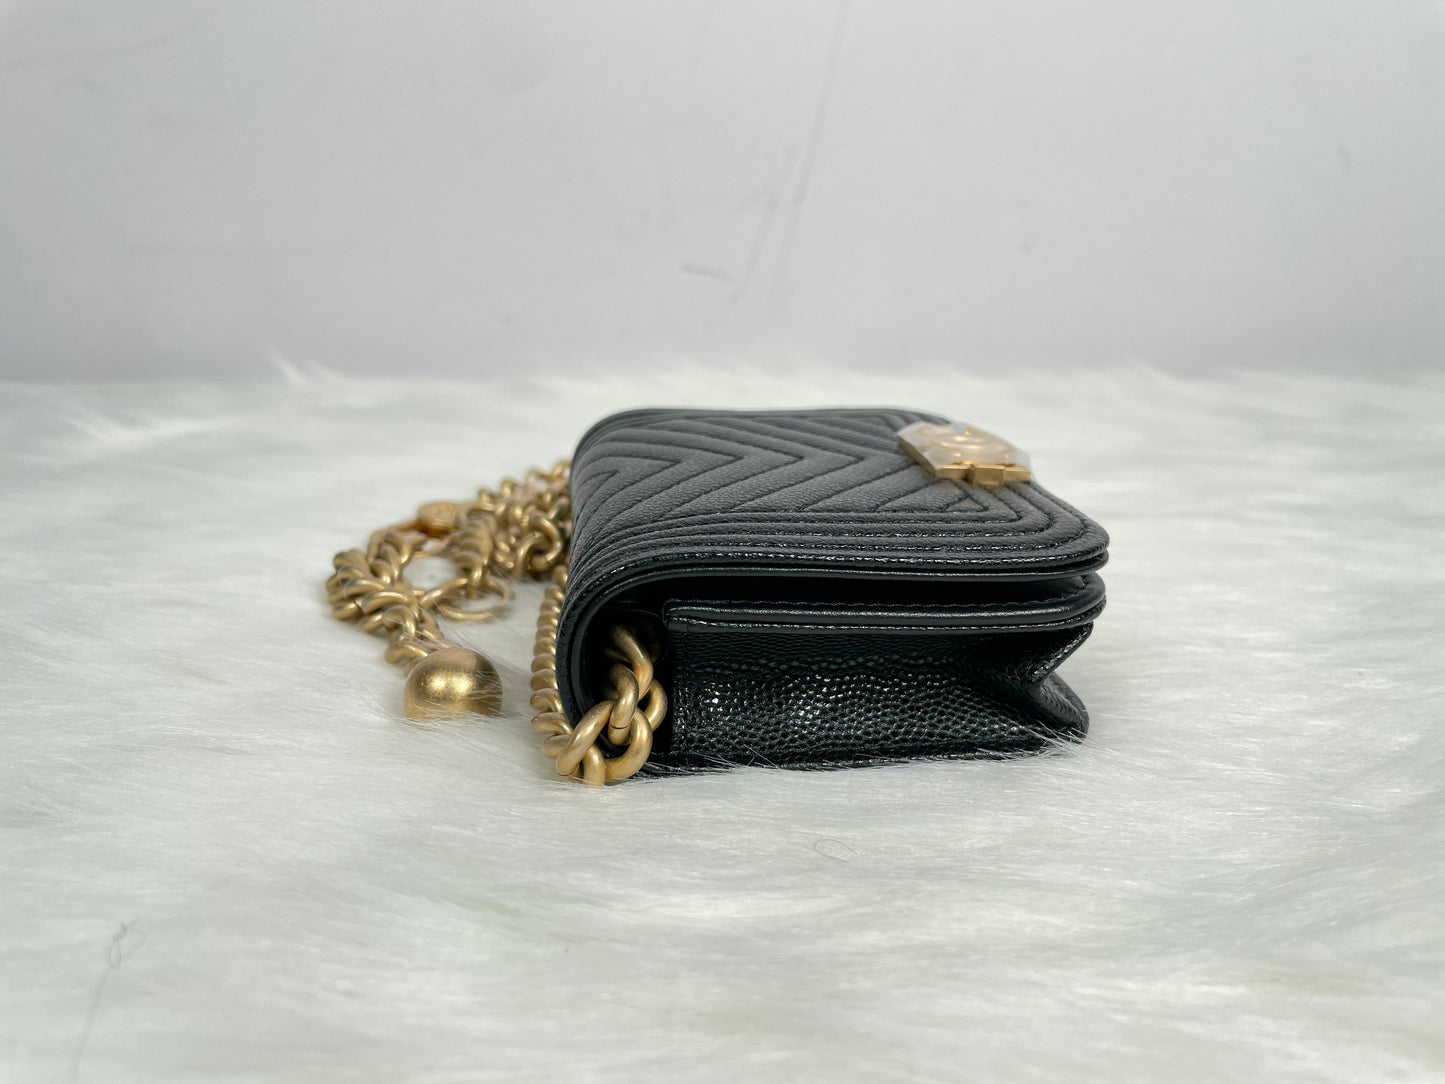 Chanel Mini Boy Chanel Belt-bag 黑色荔枝皮金扣